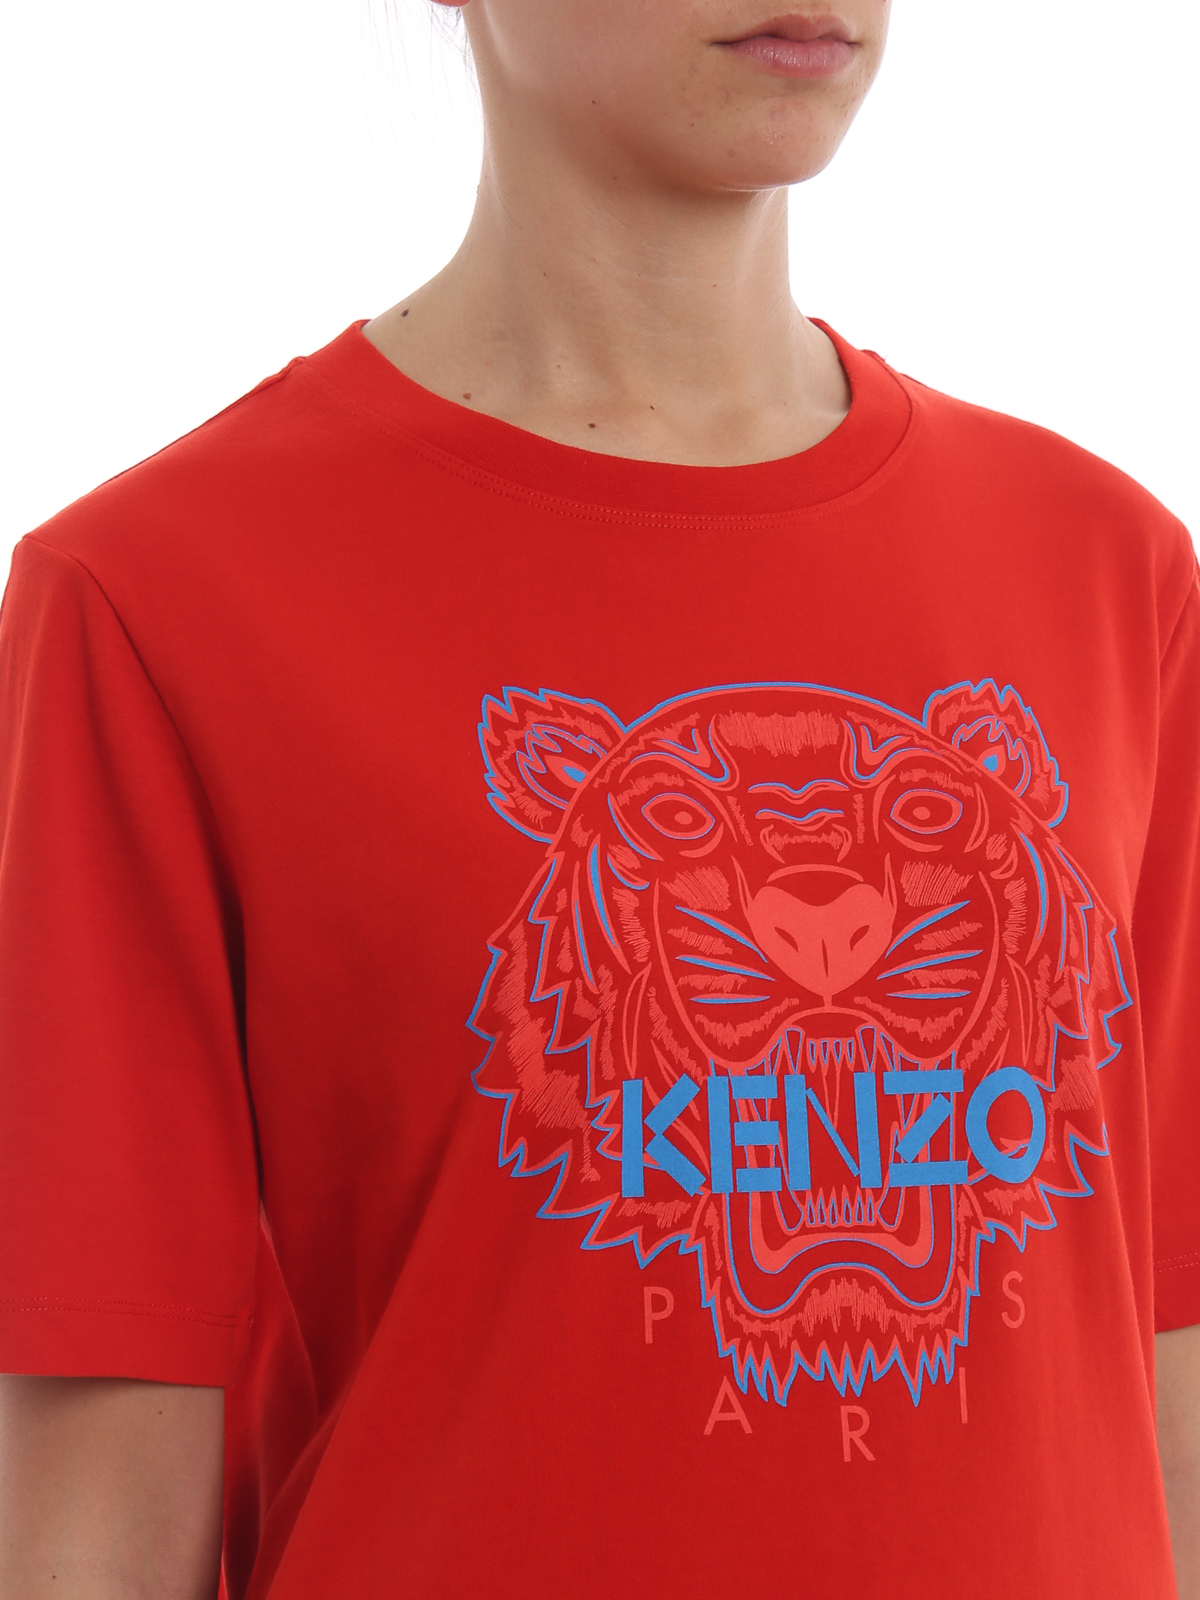 original kenzo shirt